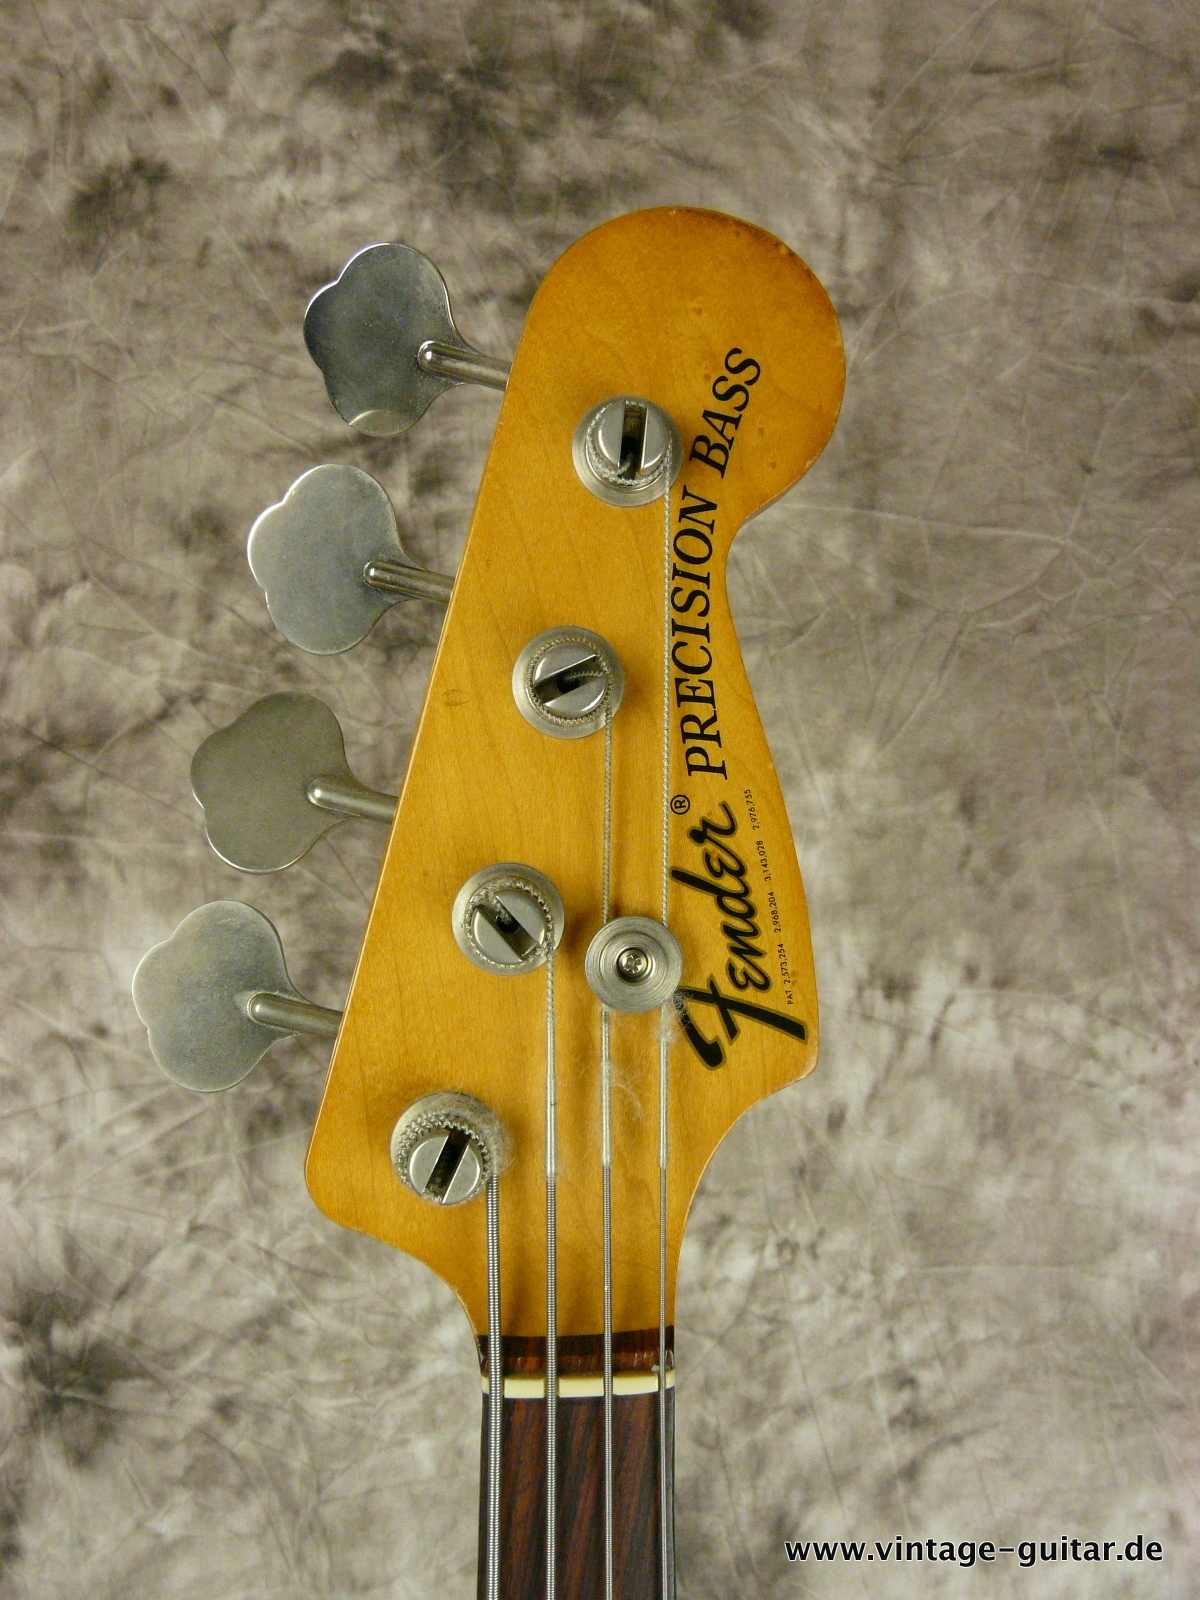 Fender-Precision_Bass-1973-sunburst-J-Bass-Pickup-007.JPG